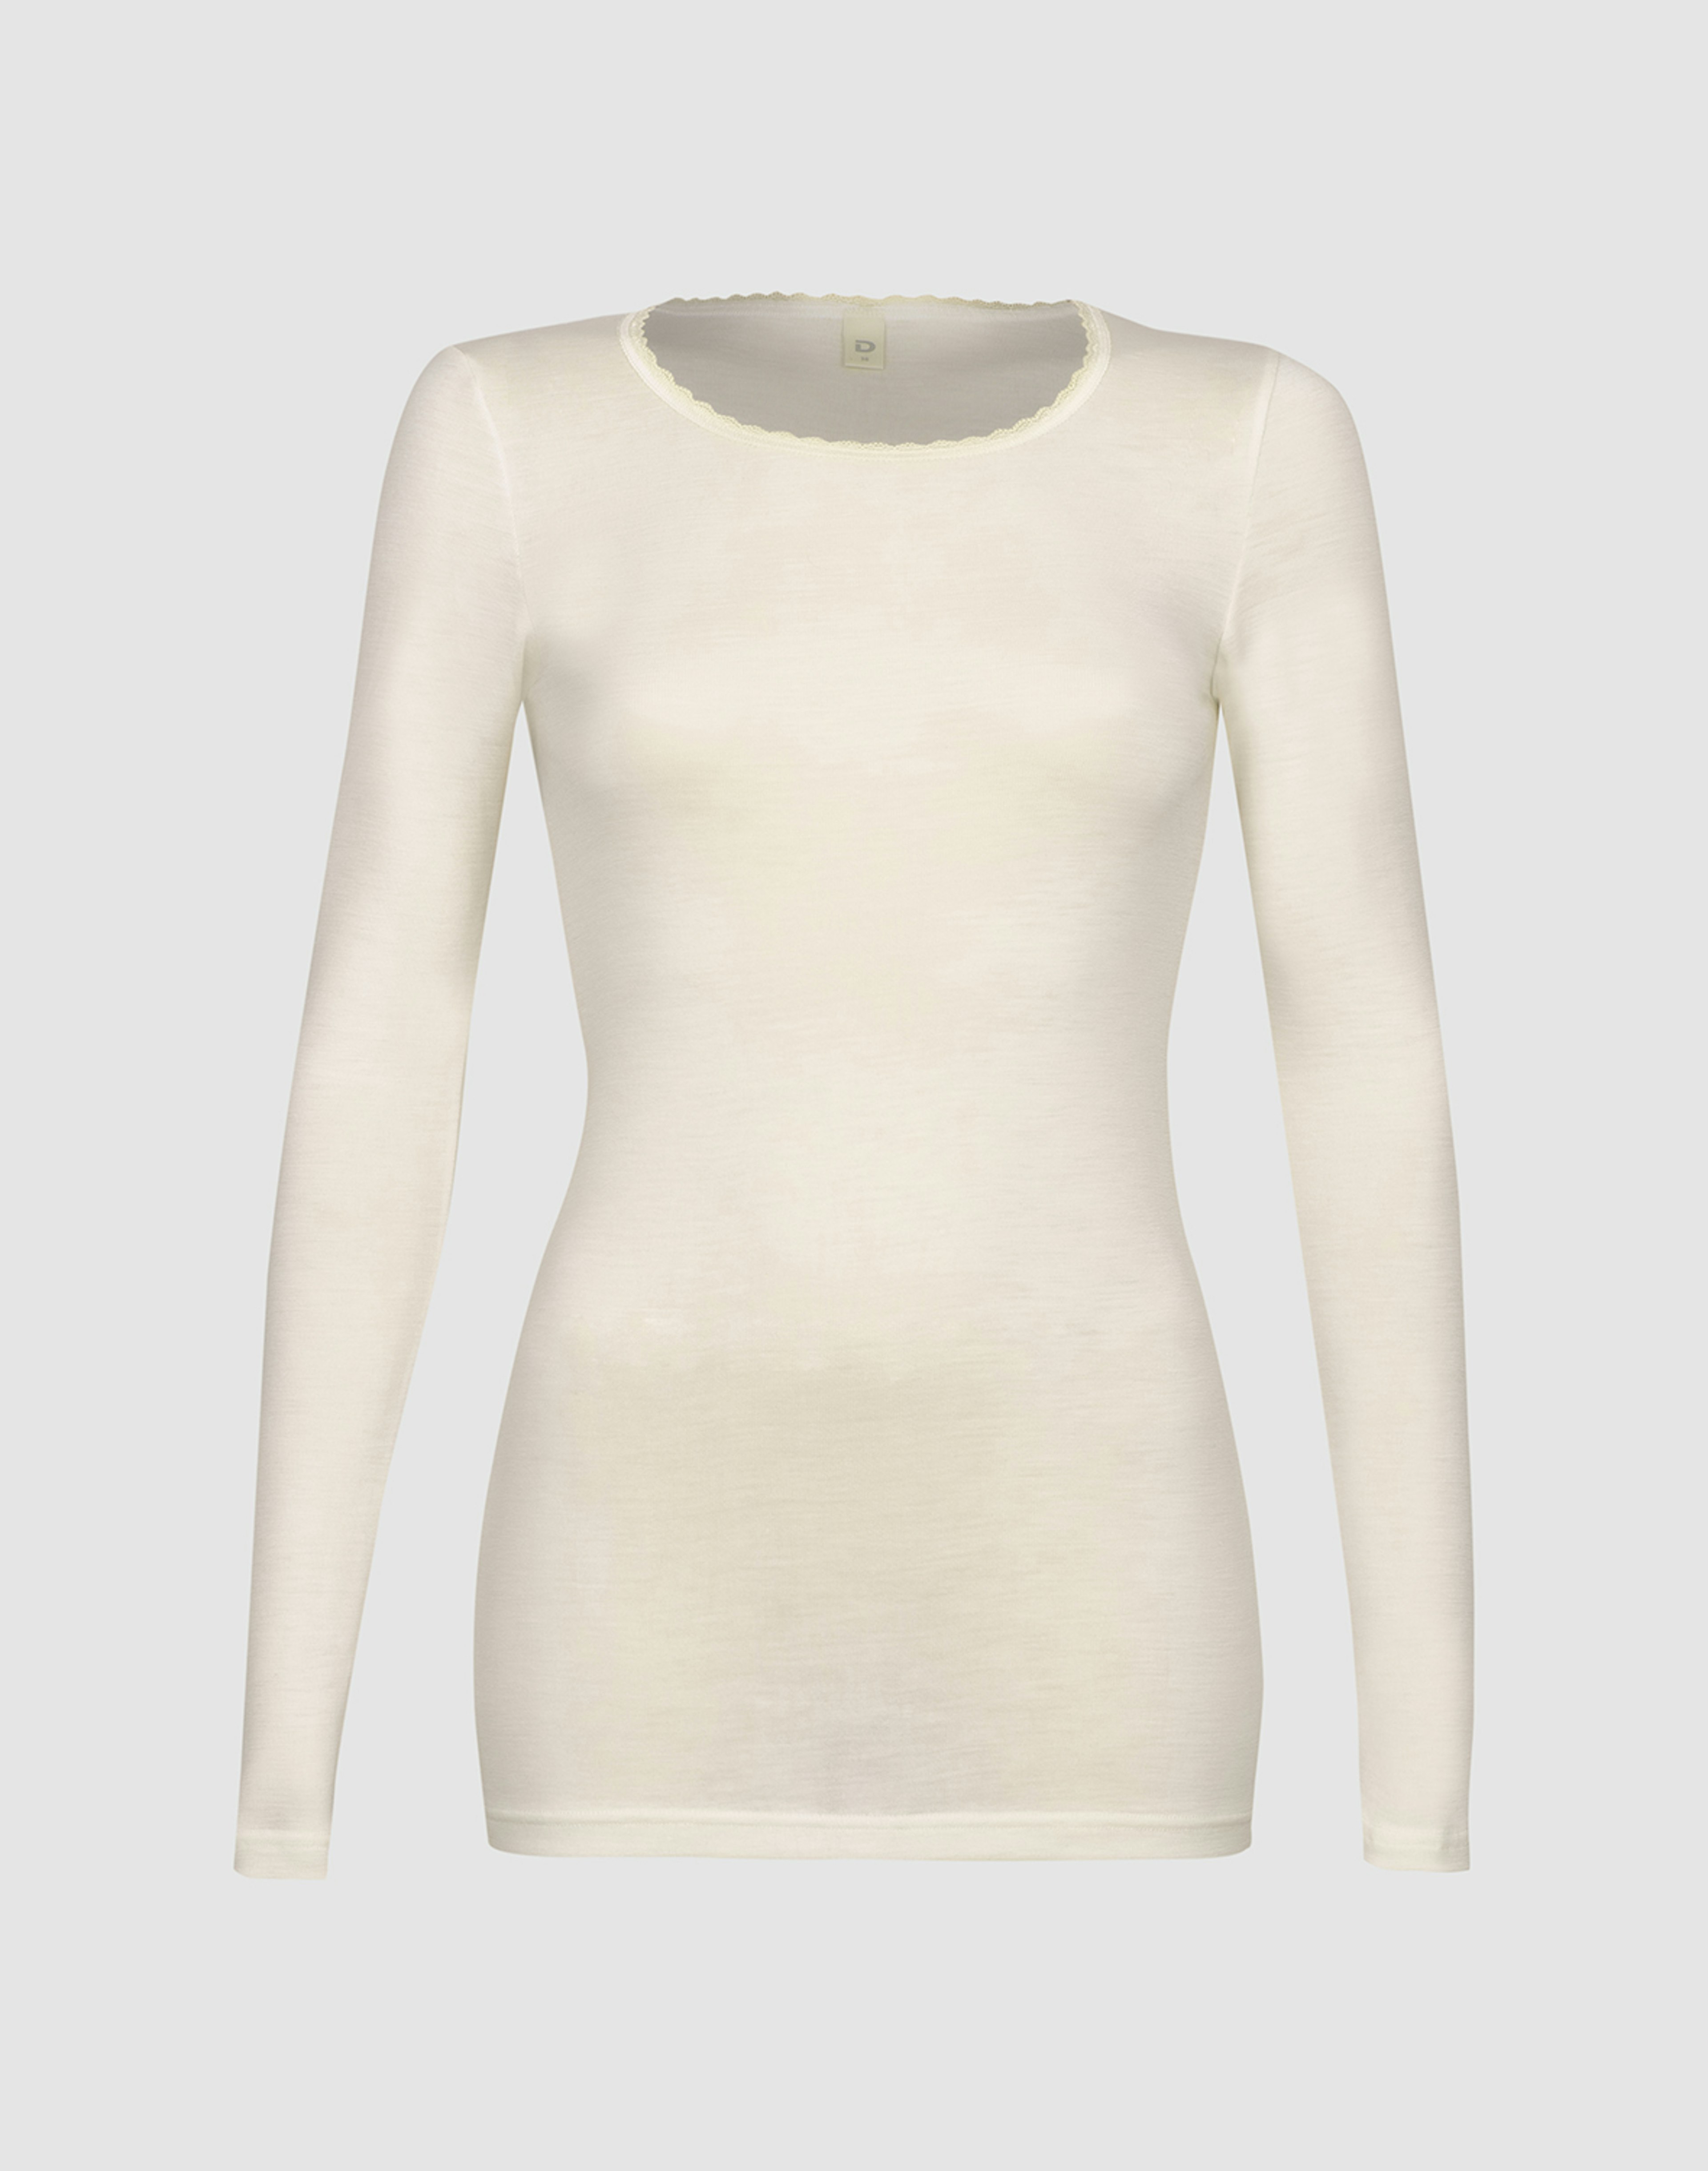 Women's merino wool/silk long sleeve top